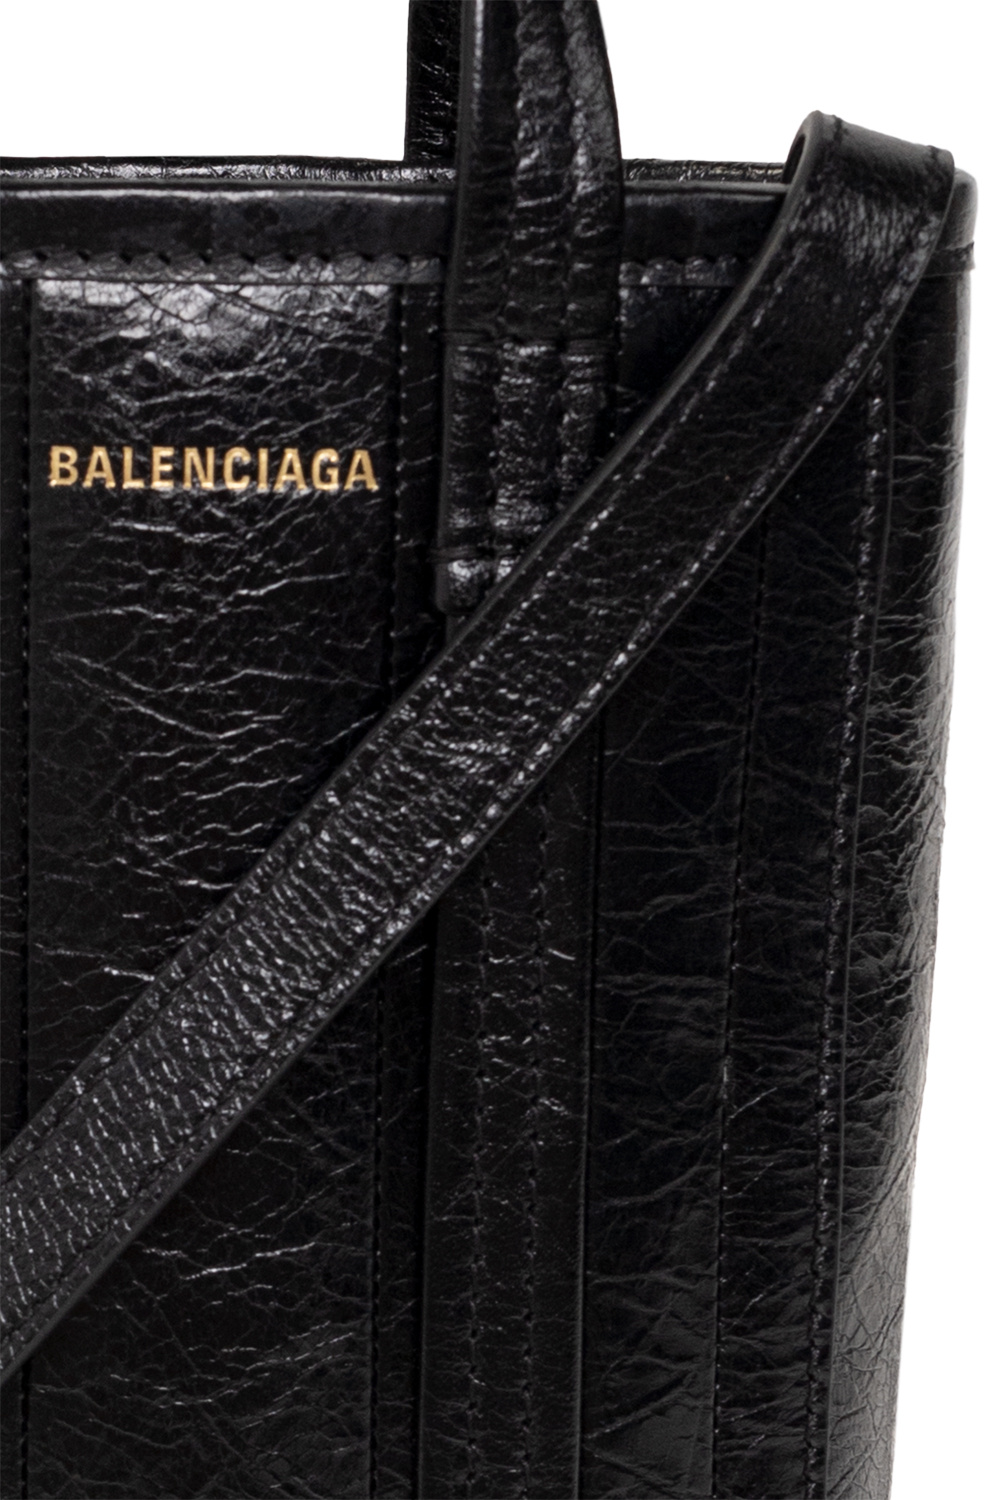 Balenciaga ‘Barbes’ phone holder